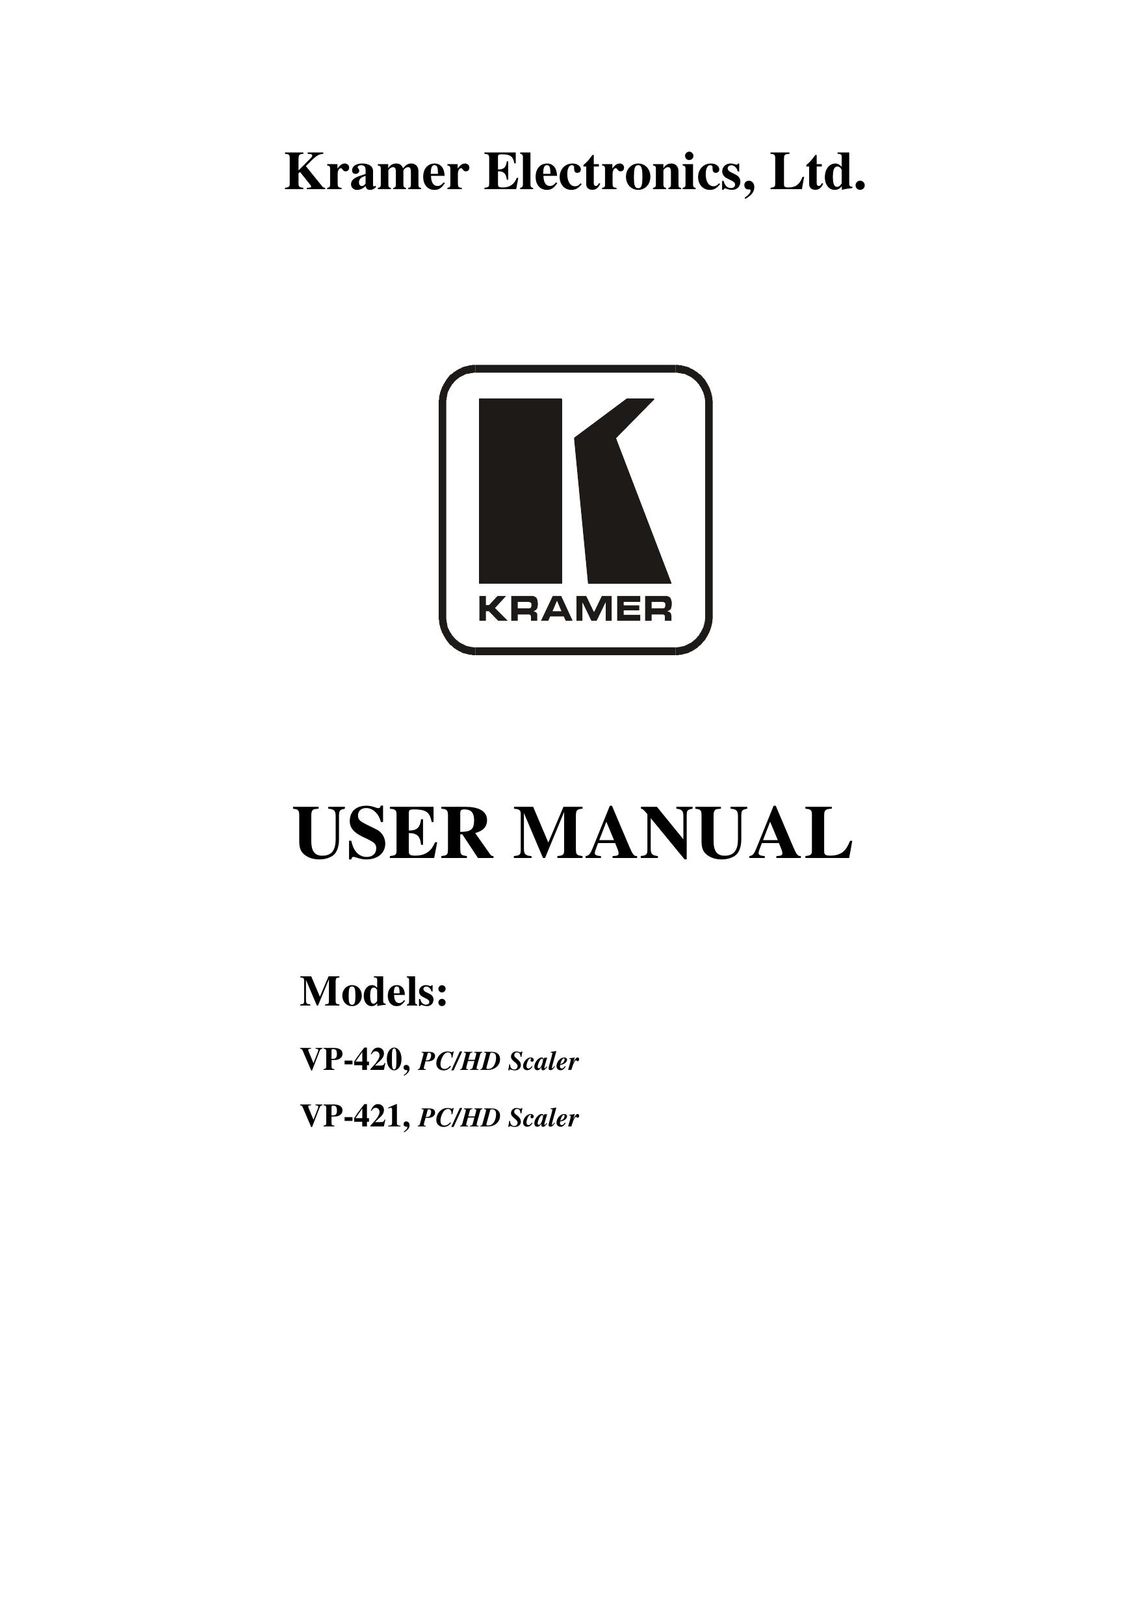 Kramer Electronics VP-421 Food Saver User Manual